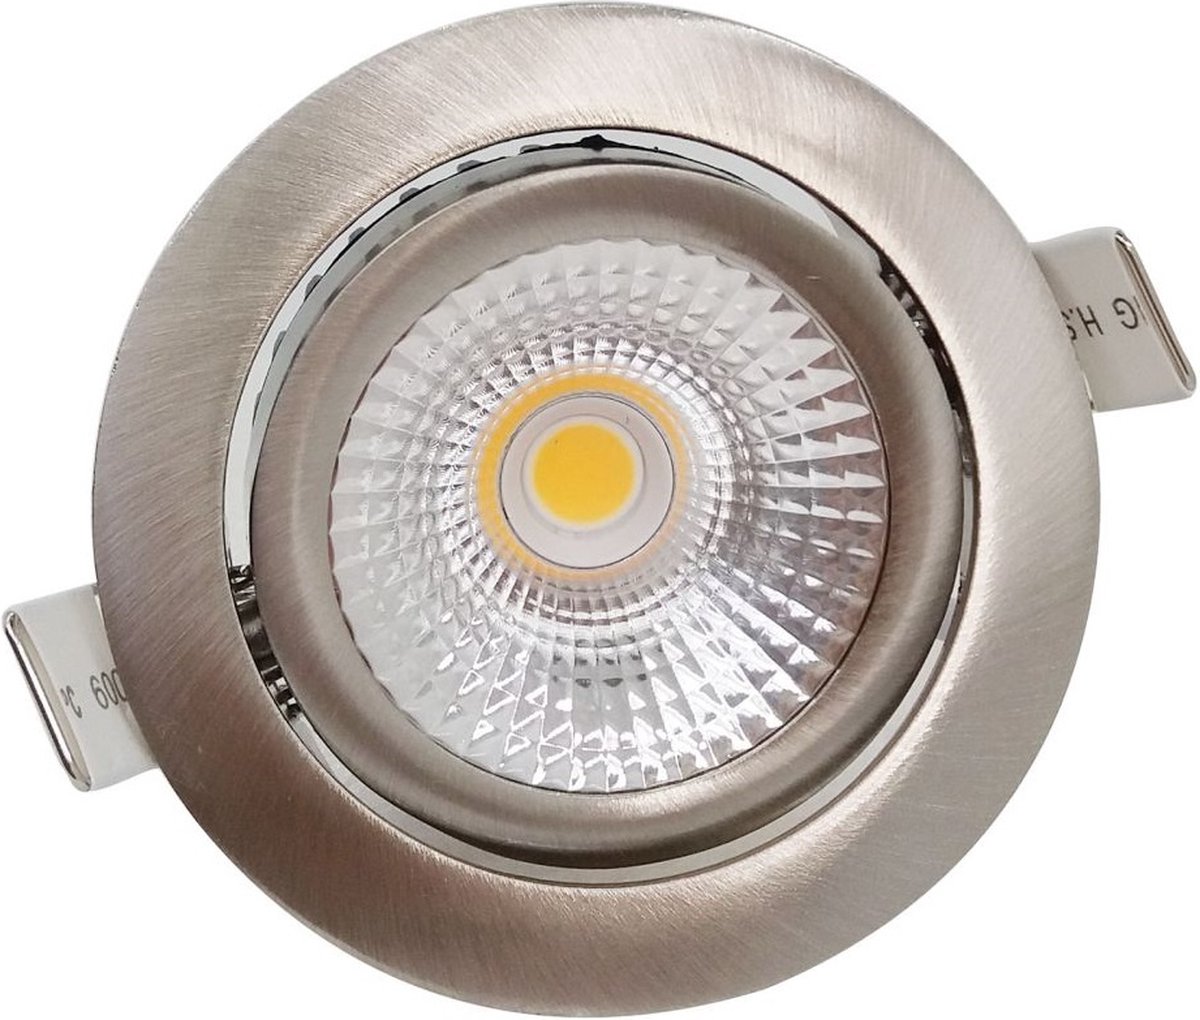 LED inbouwspot RVS Dimbaar - 5W vervangt 50W - 2700K warm wit licht